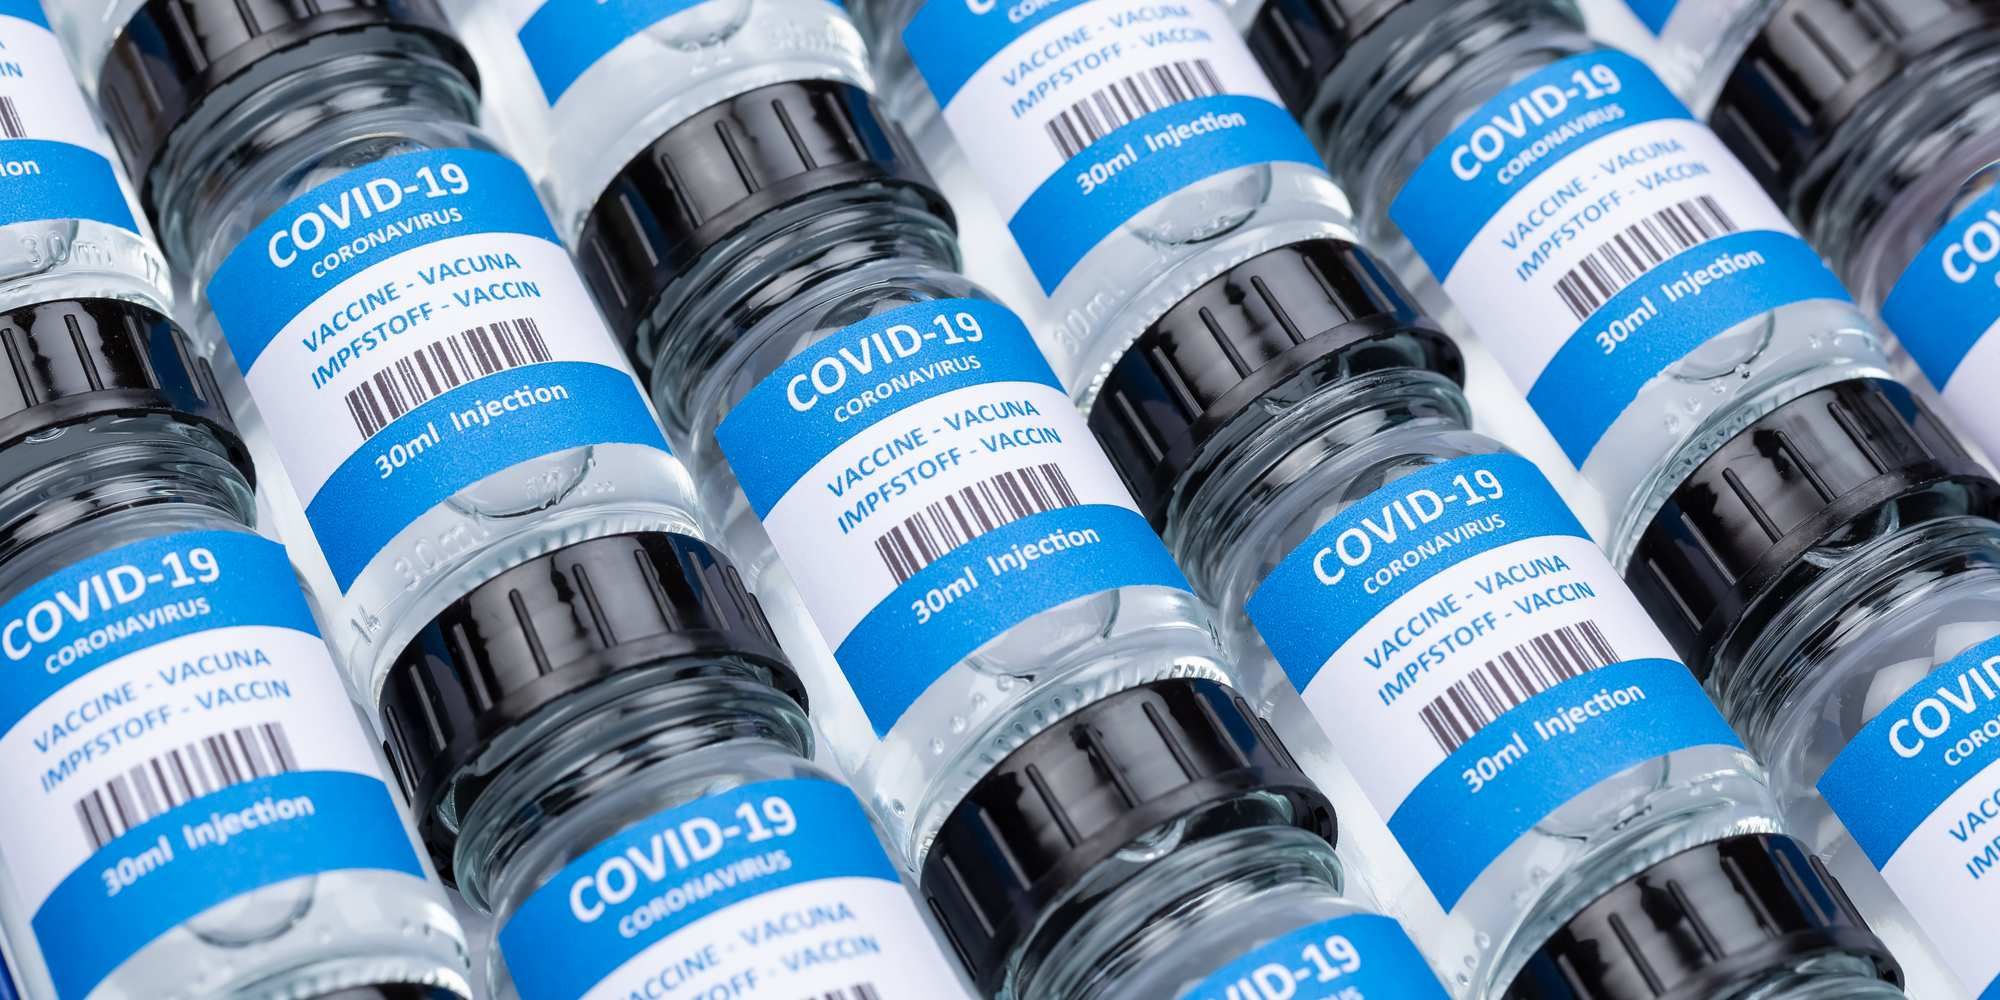 Seniors Threaten to Sue Ontario Over Lengthy Wait Between COVID-19 Vaccines